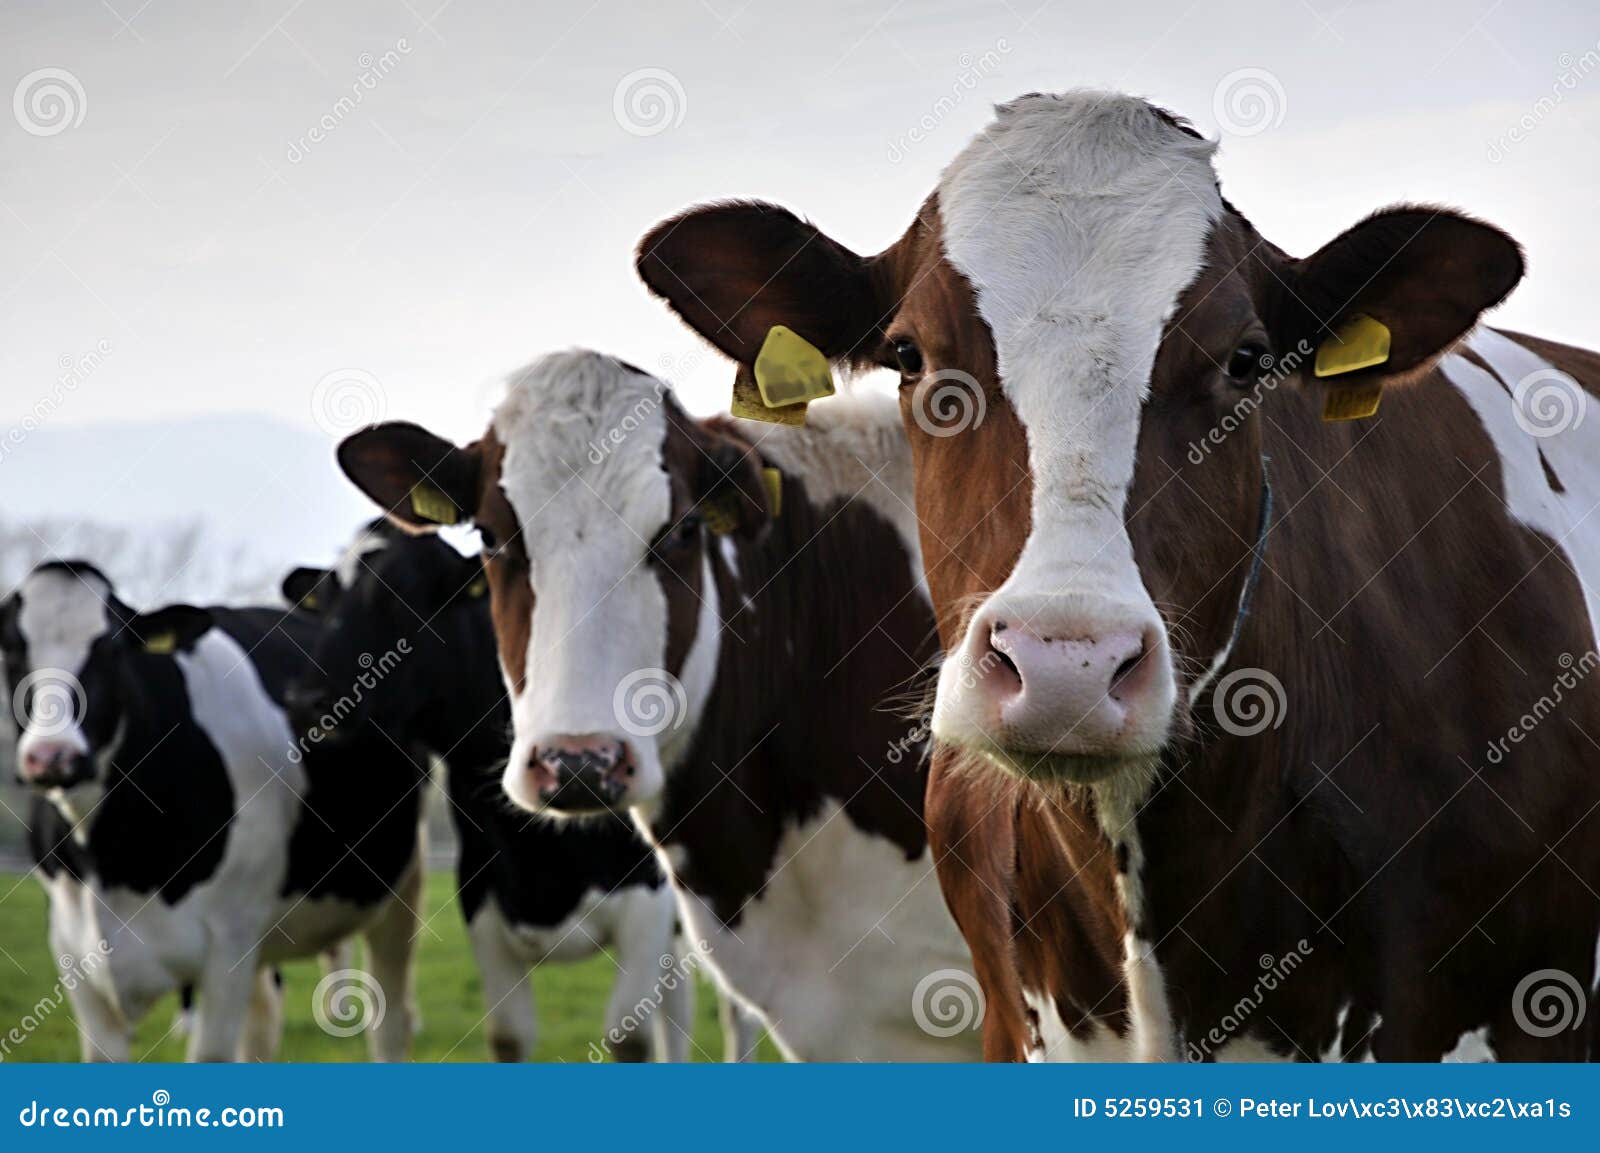 three cows